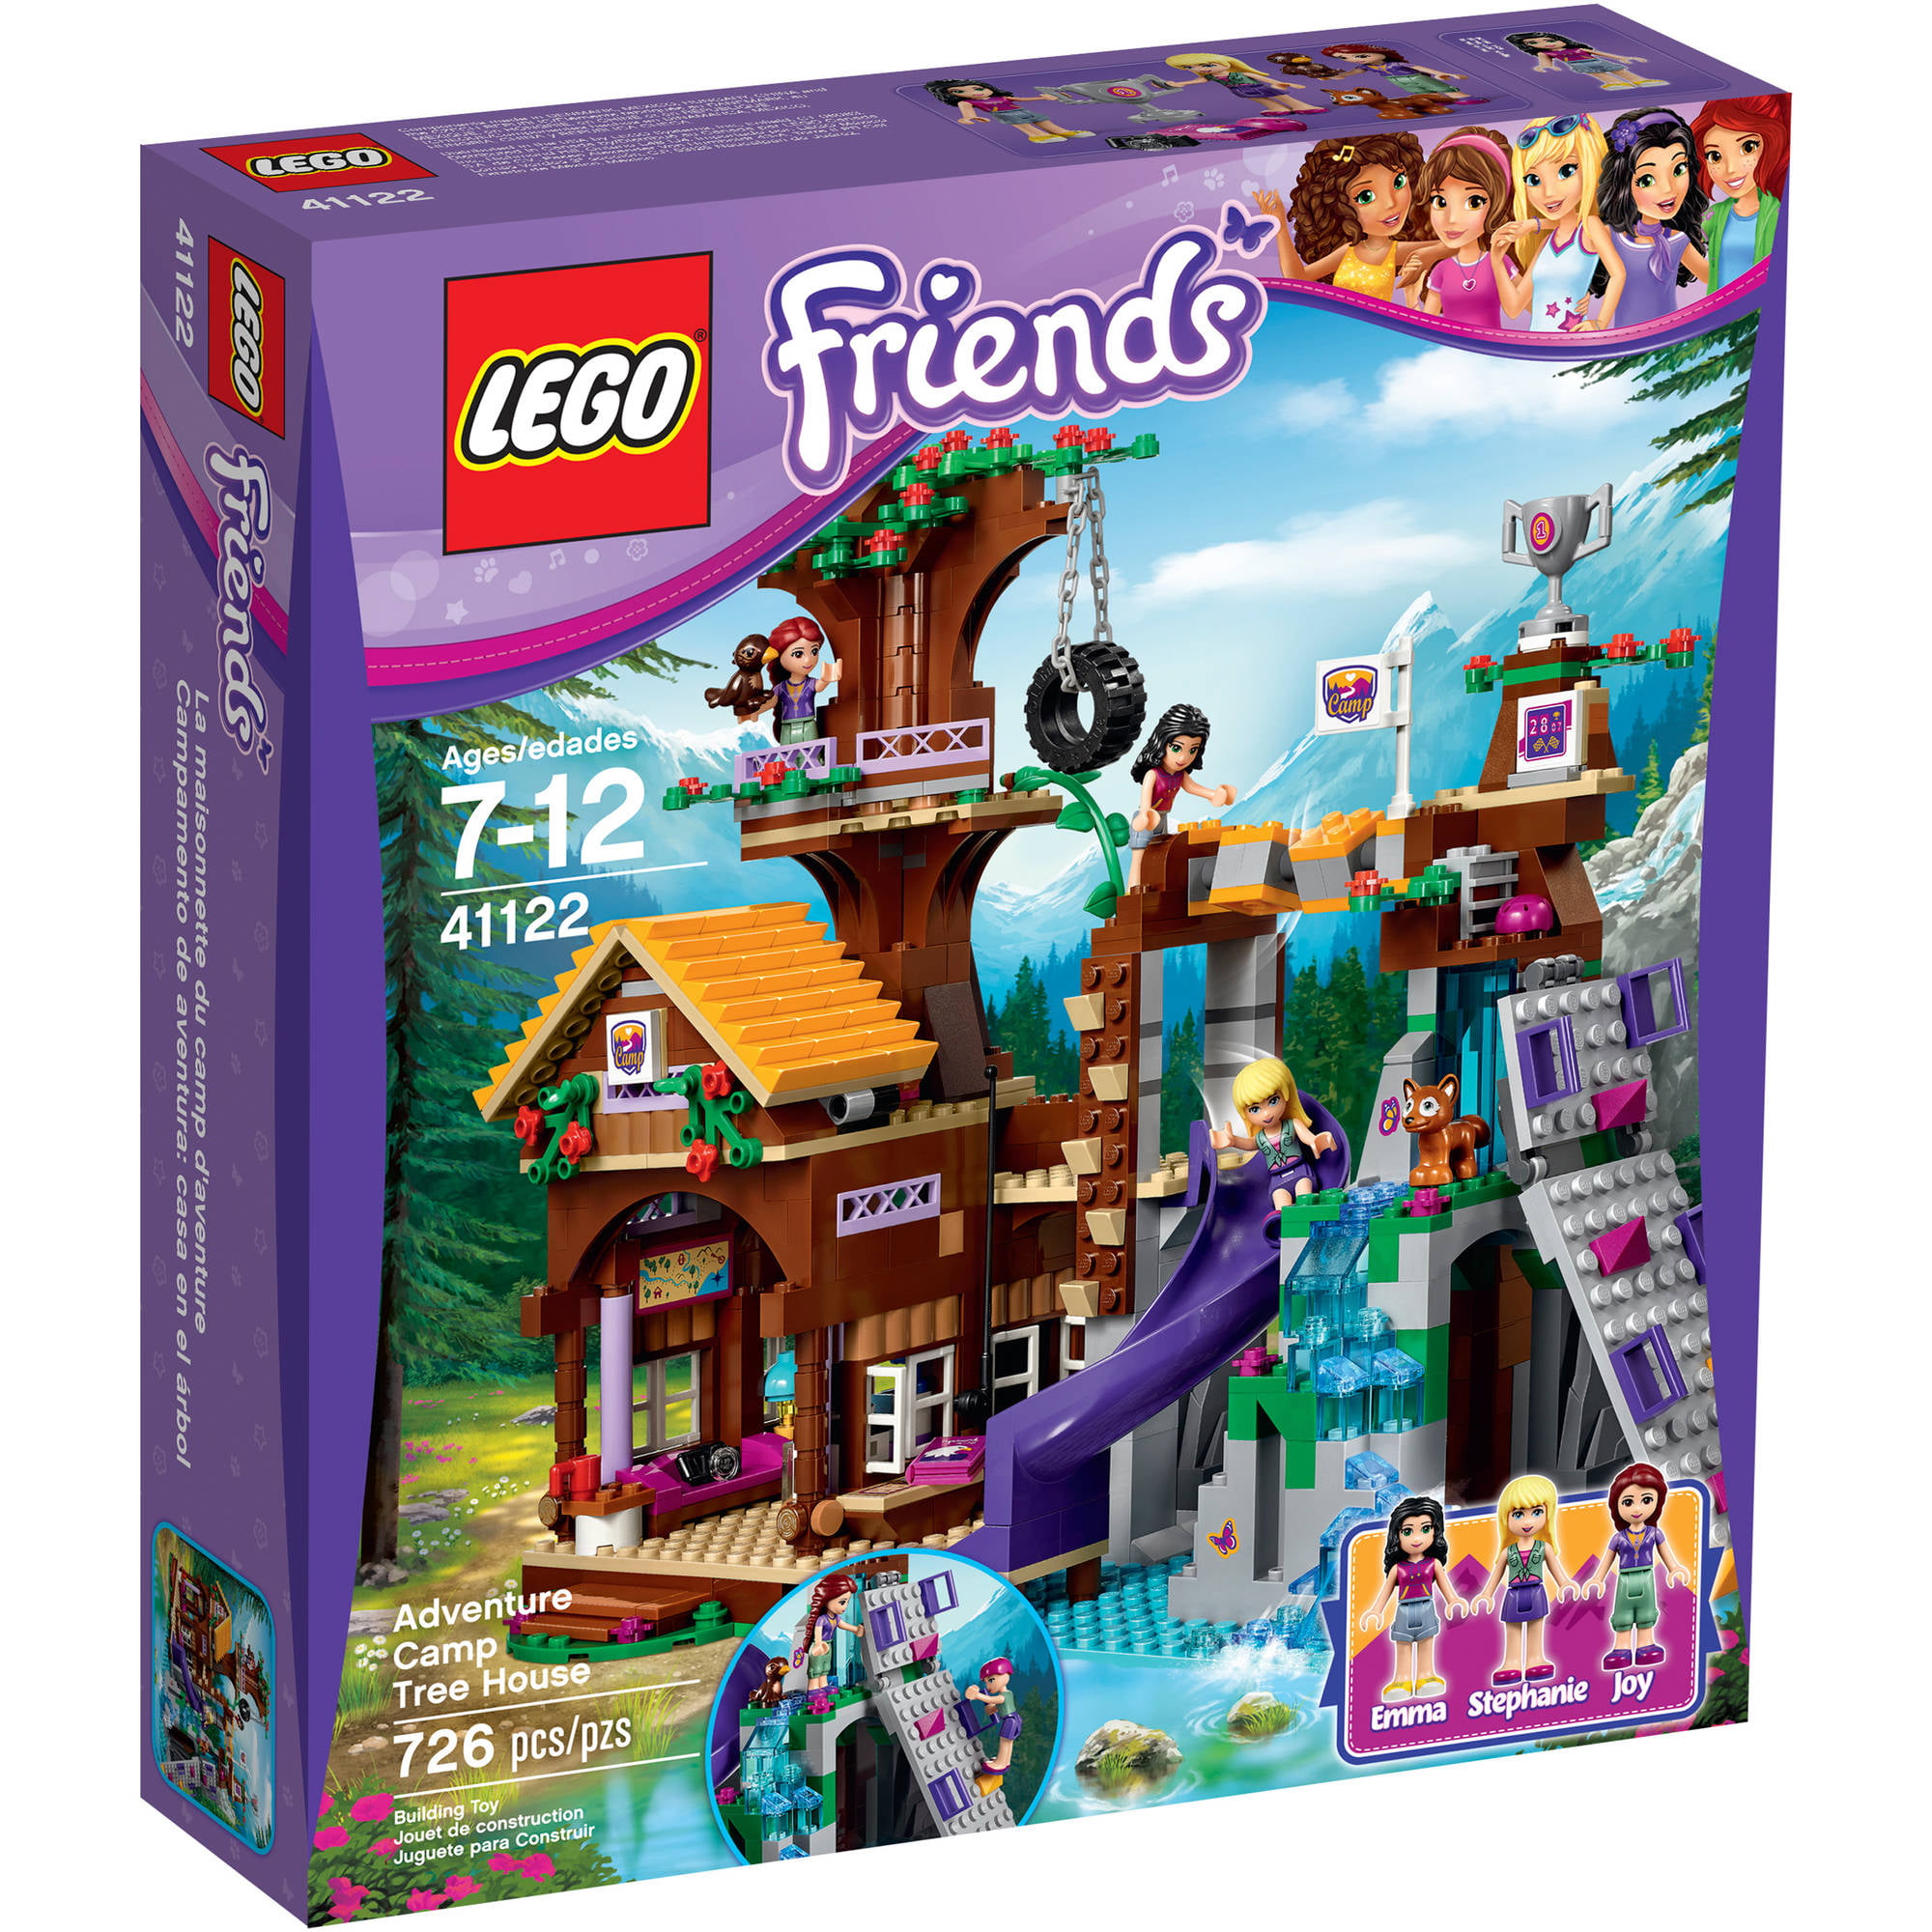 LEGO Friends Adventure Camp Tree House, 41122 - Walmart ...